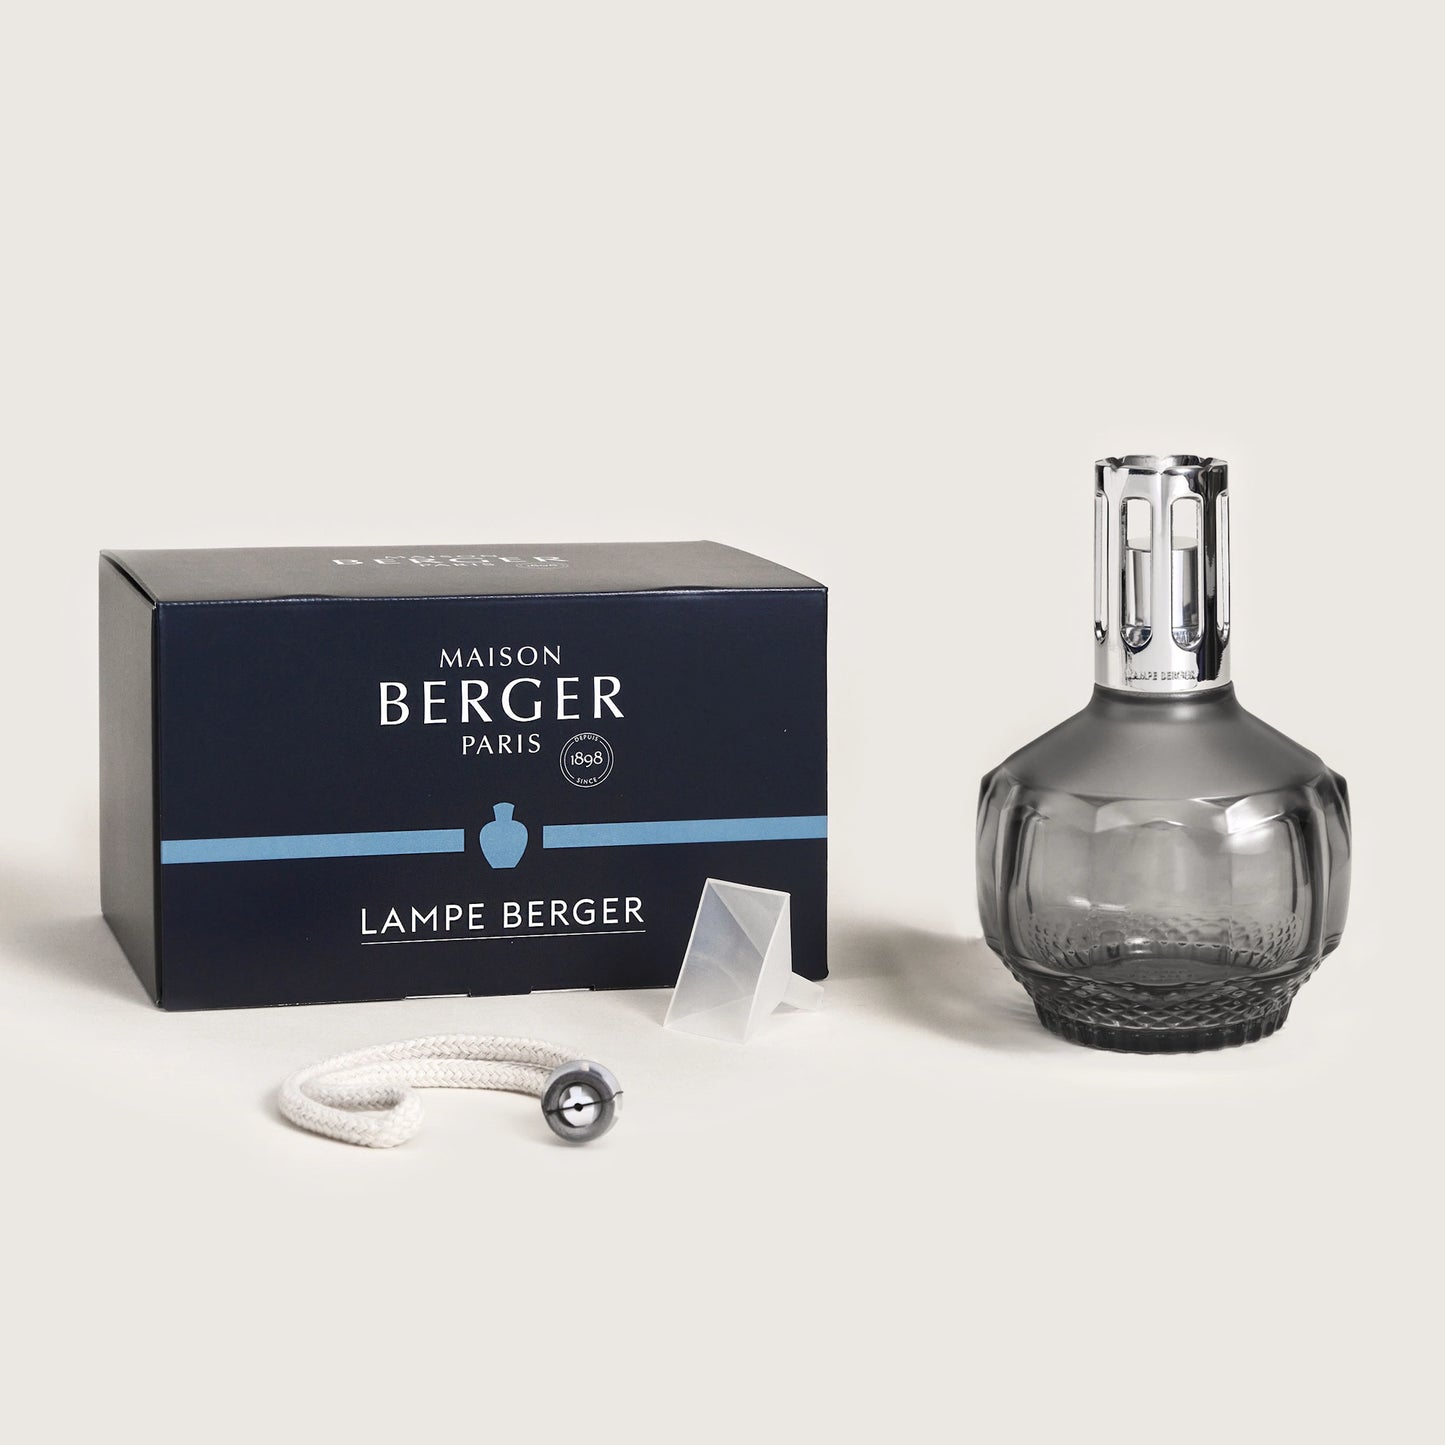 Grey Molecule Maison Berger Lamp Berger